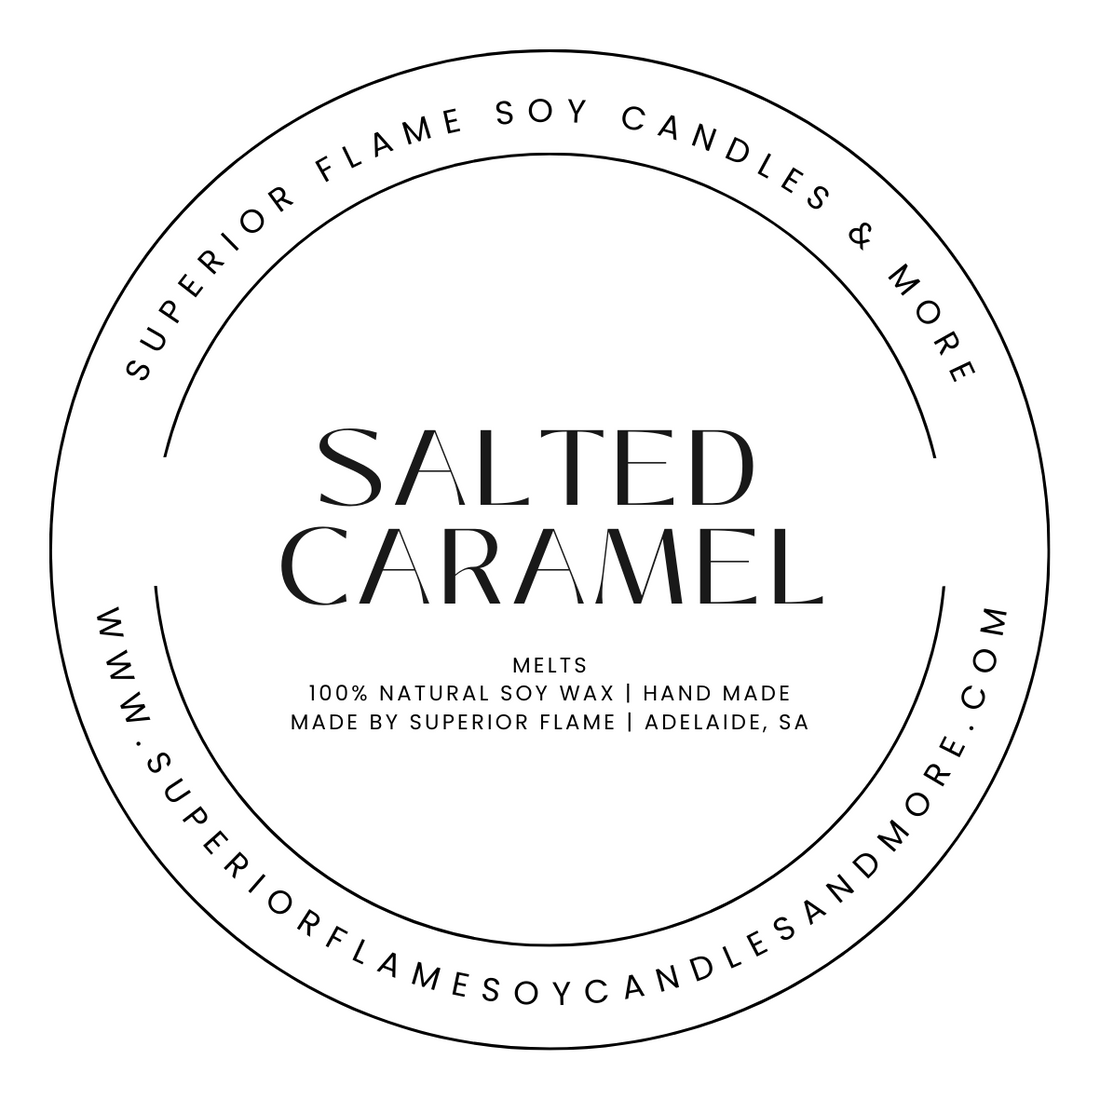 SALTED CARAMEL MELTS